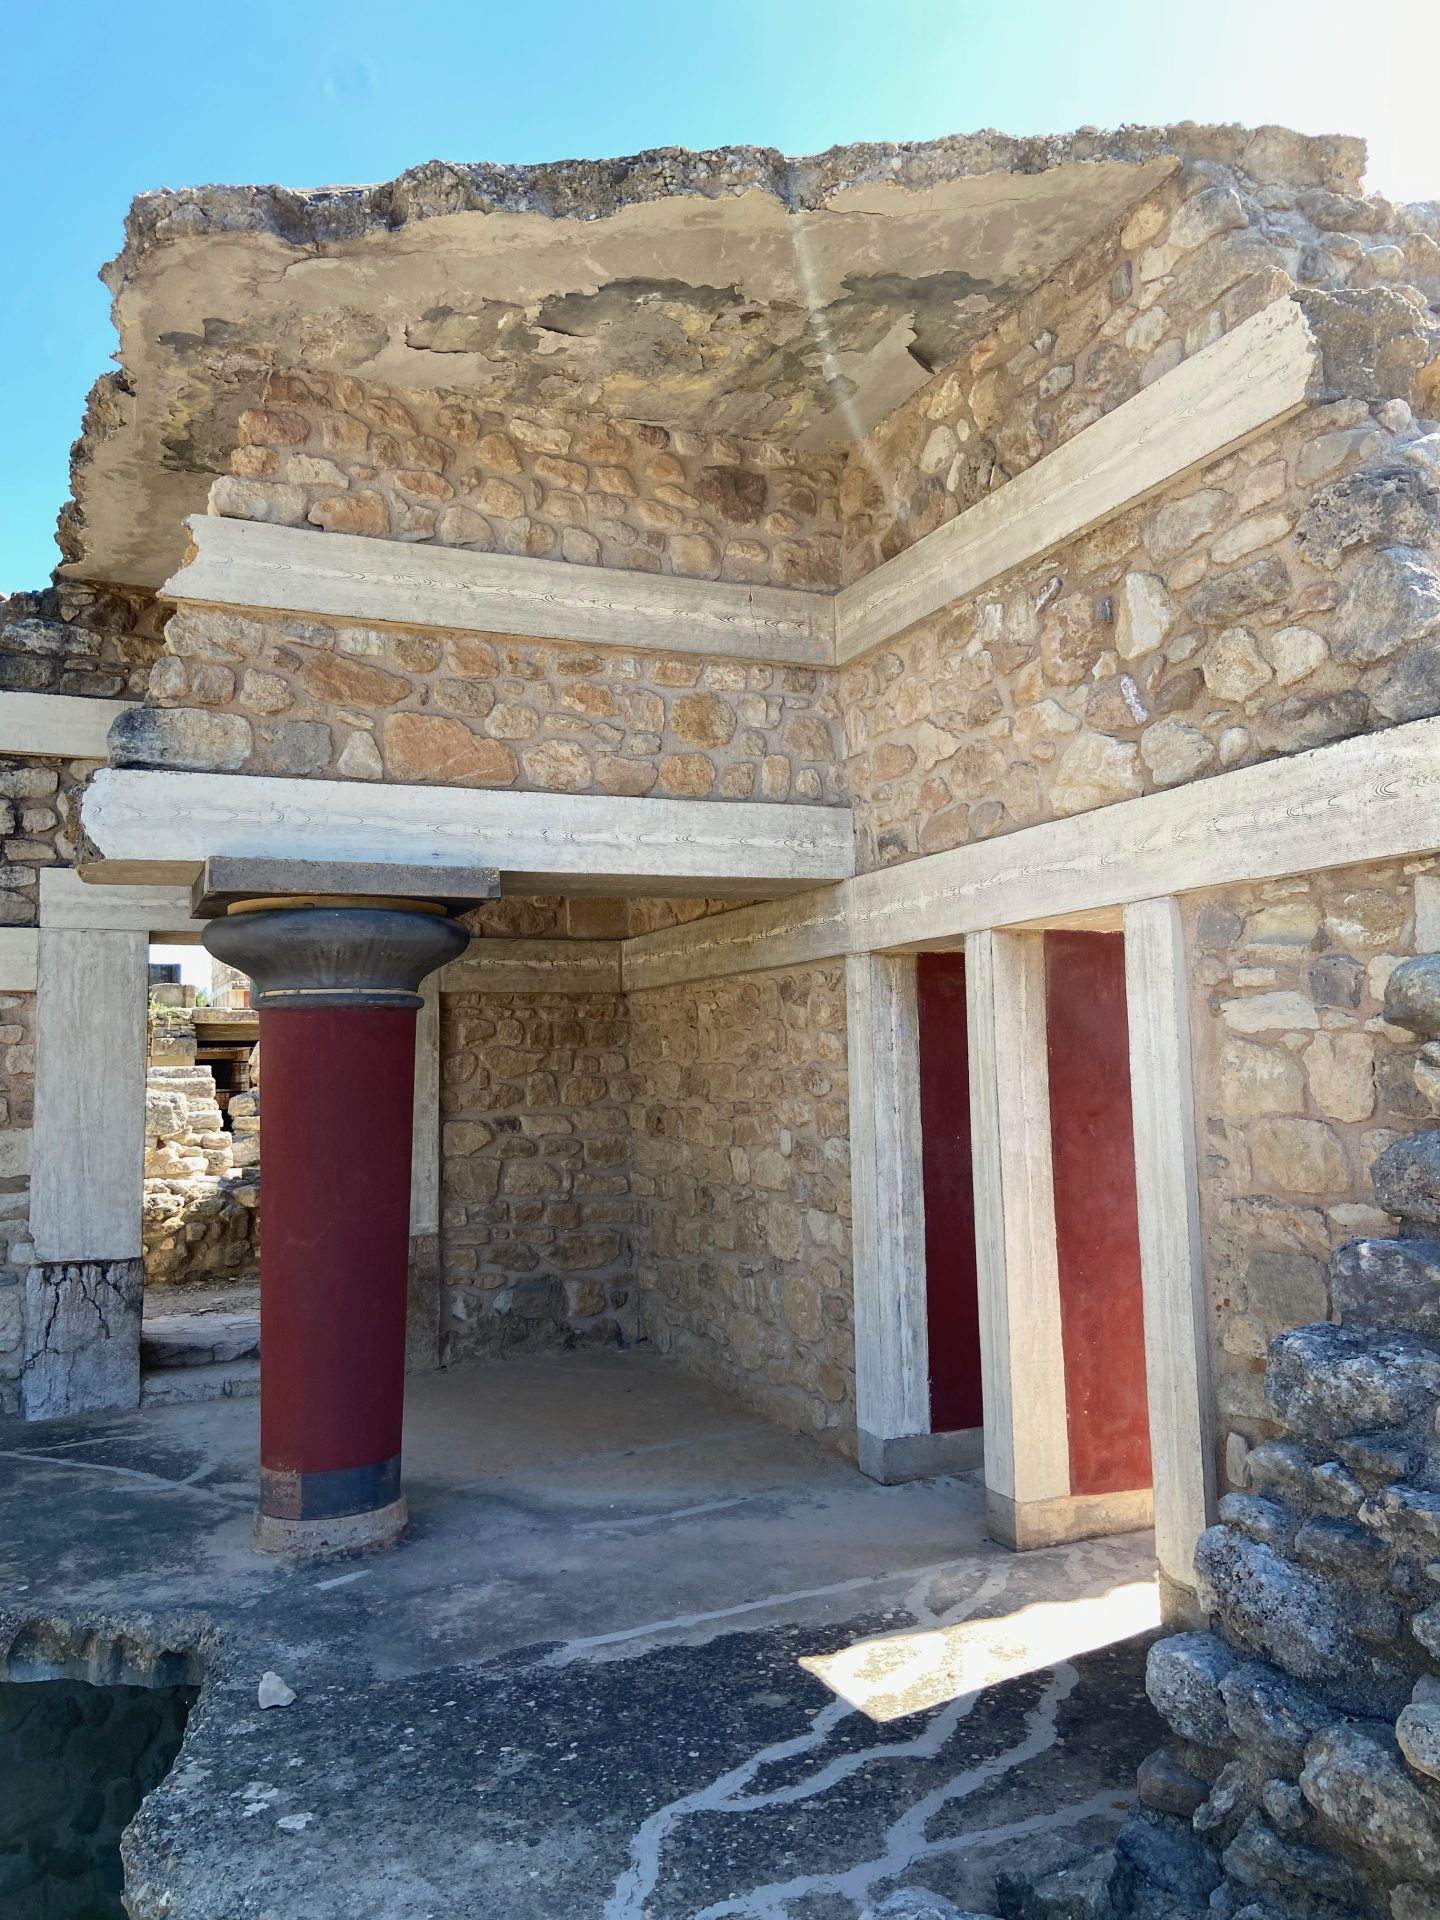 Little Palace of Minoan Knossos